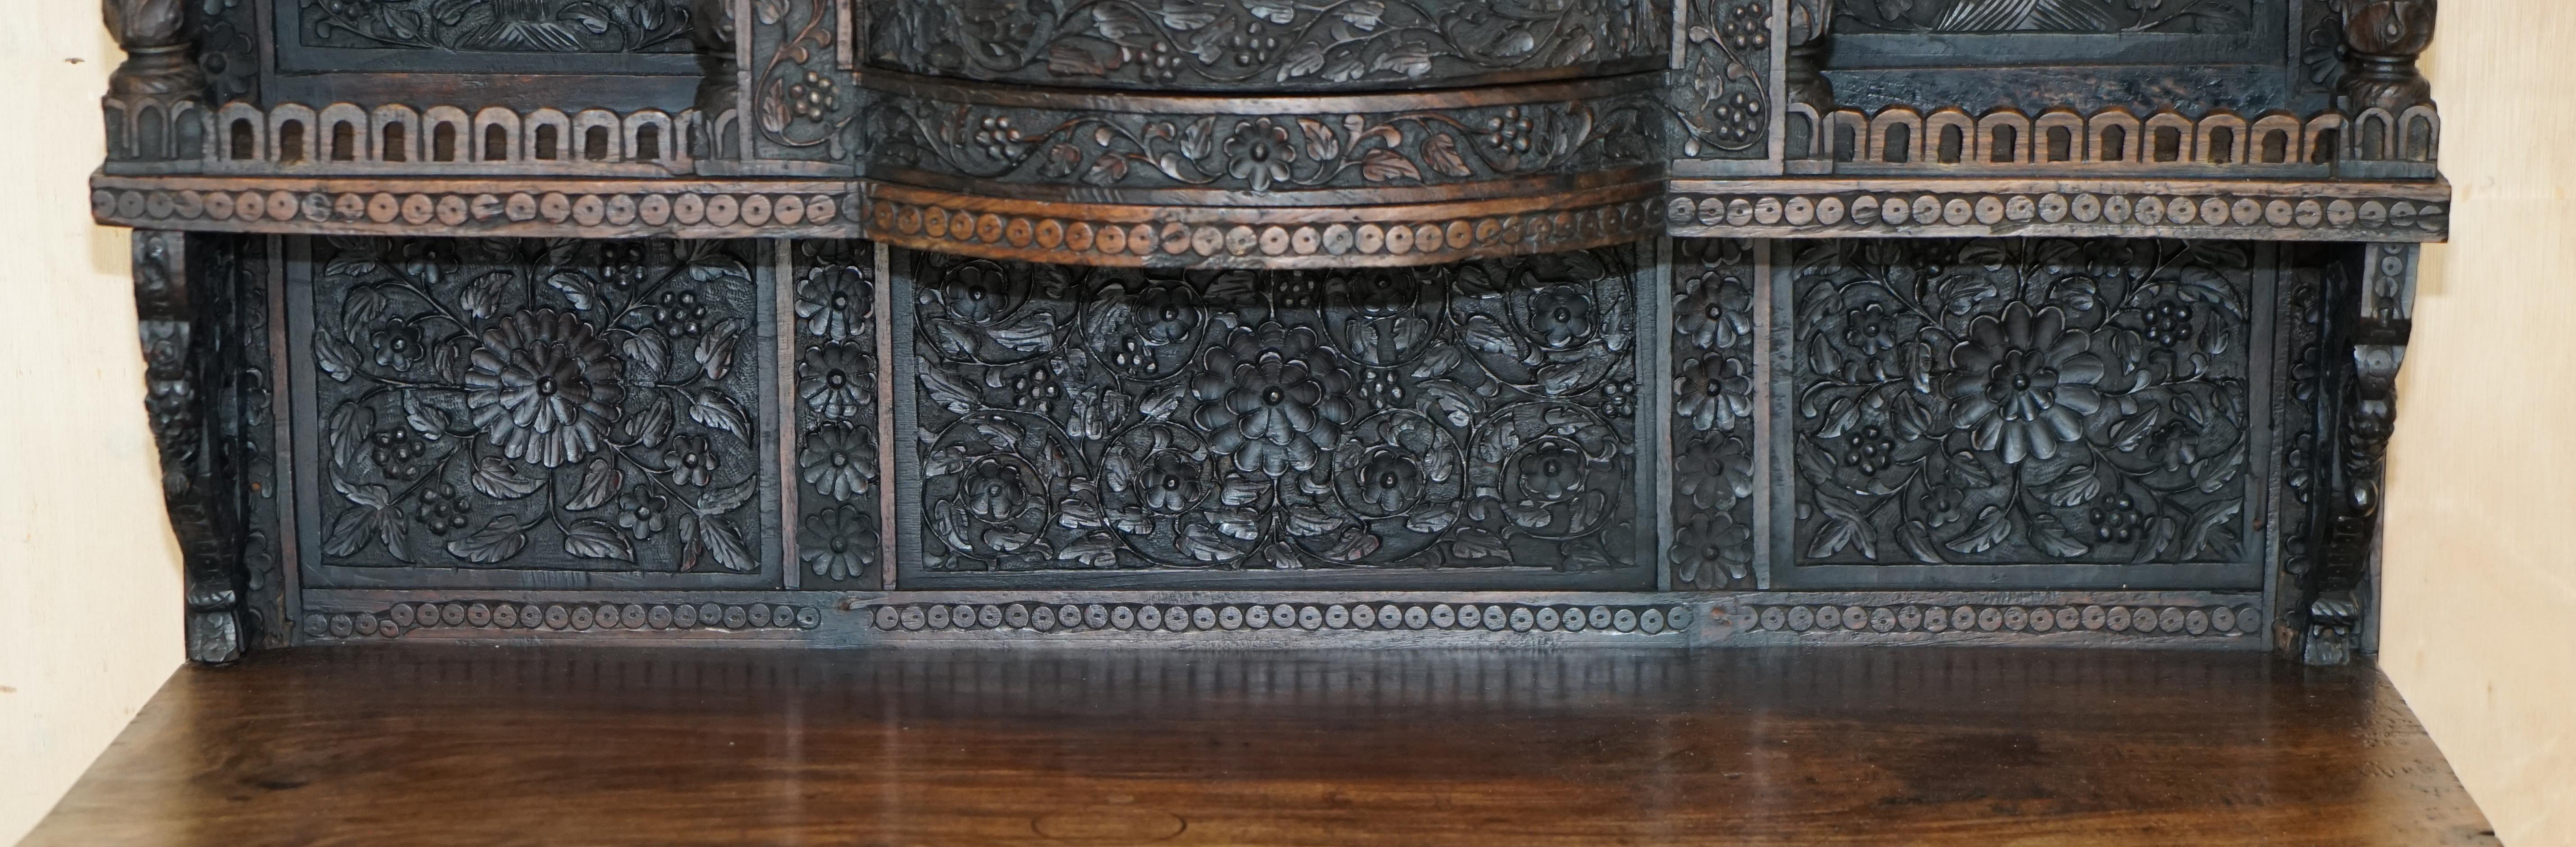 Antique circa 1860 Ornately Hand Carved Burmese Temple Dresser Sideboard Cabinet For Sale 2